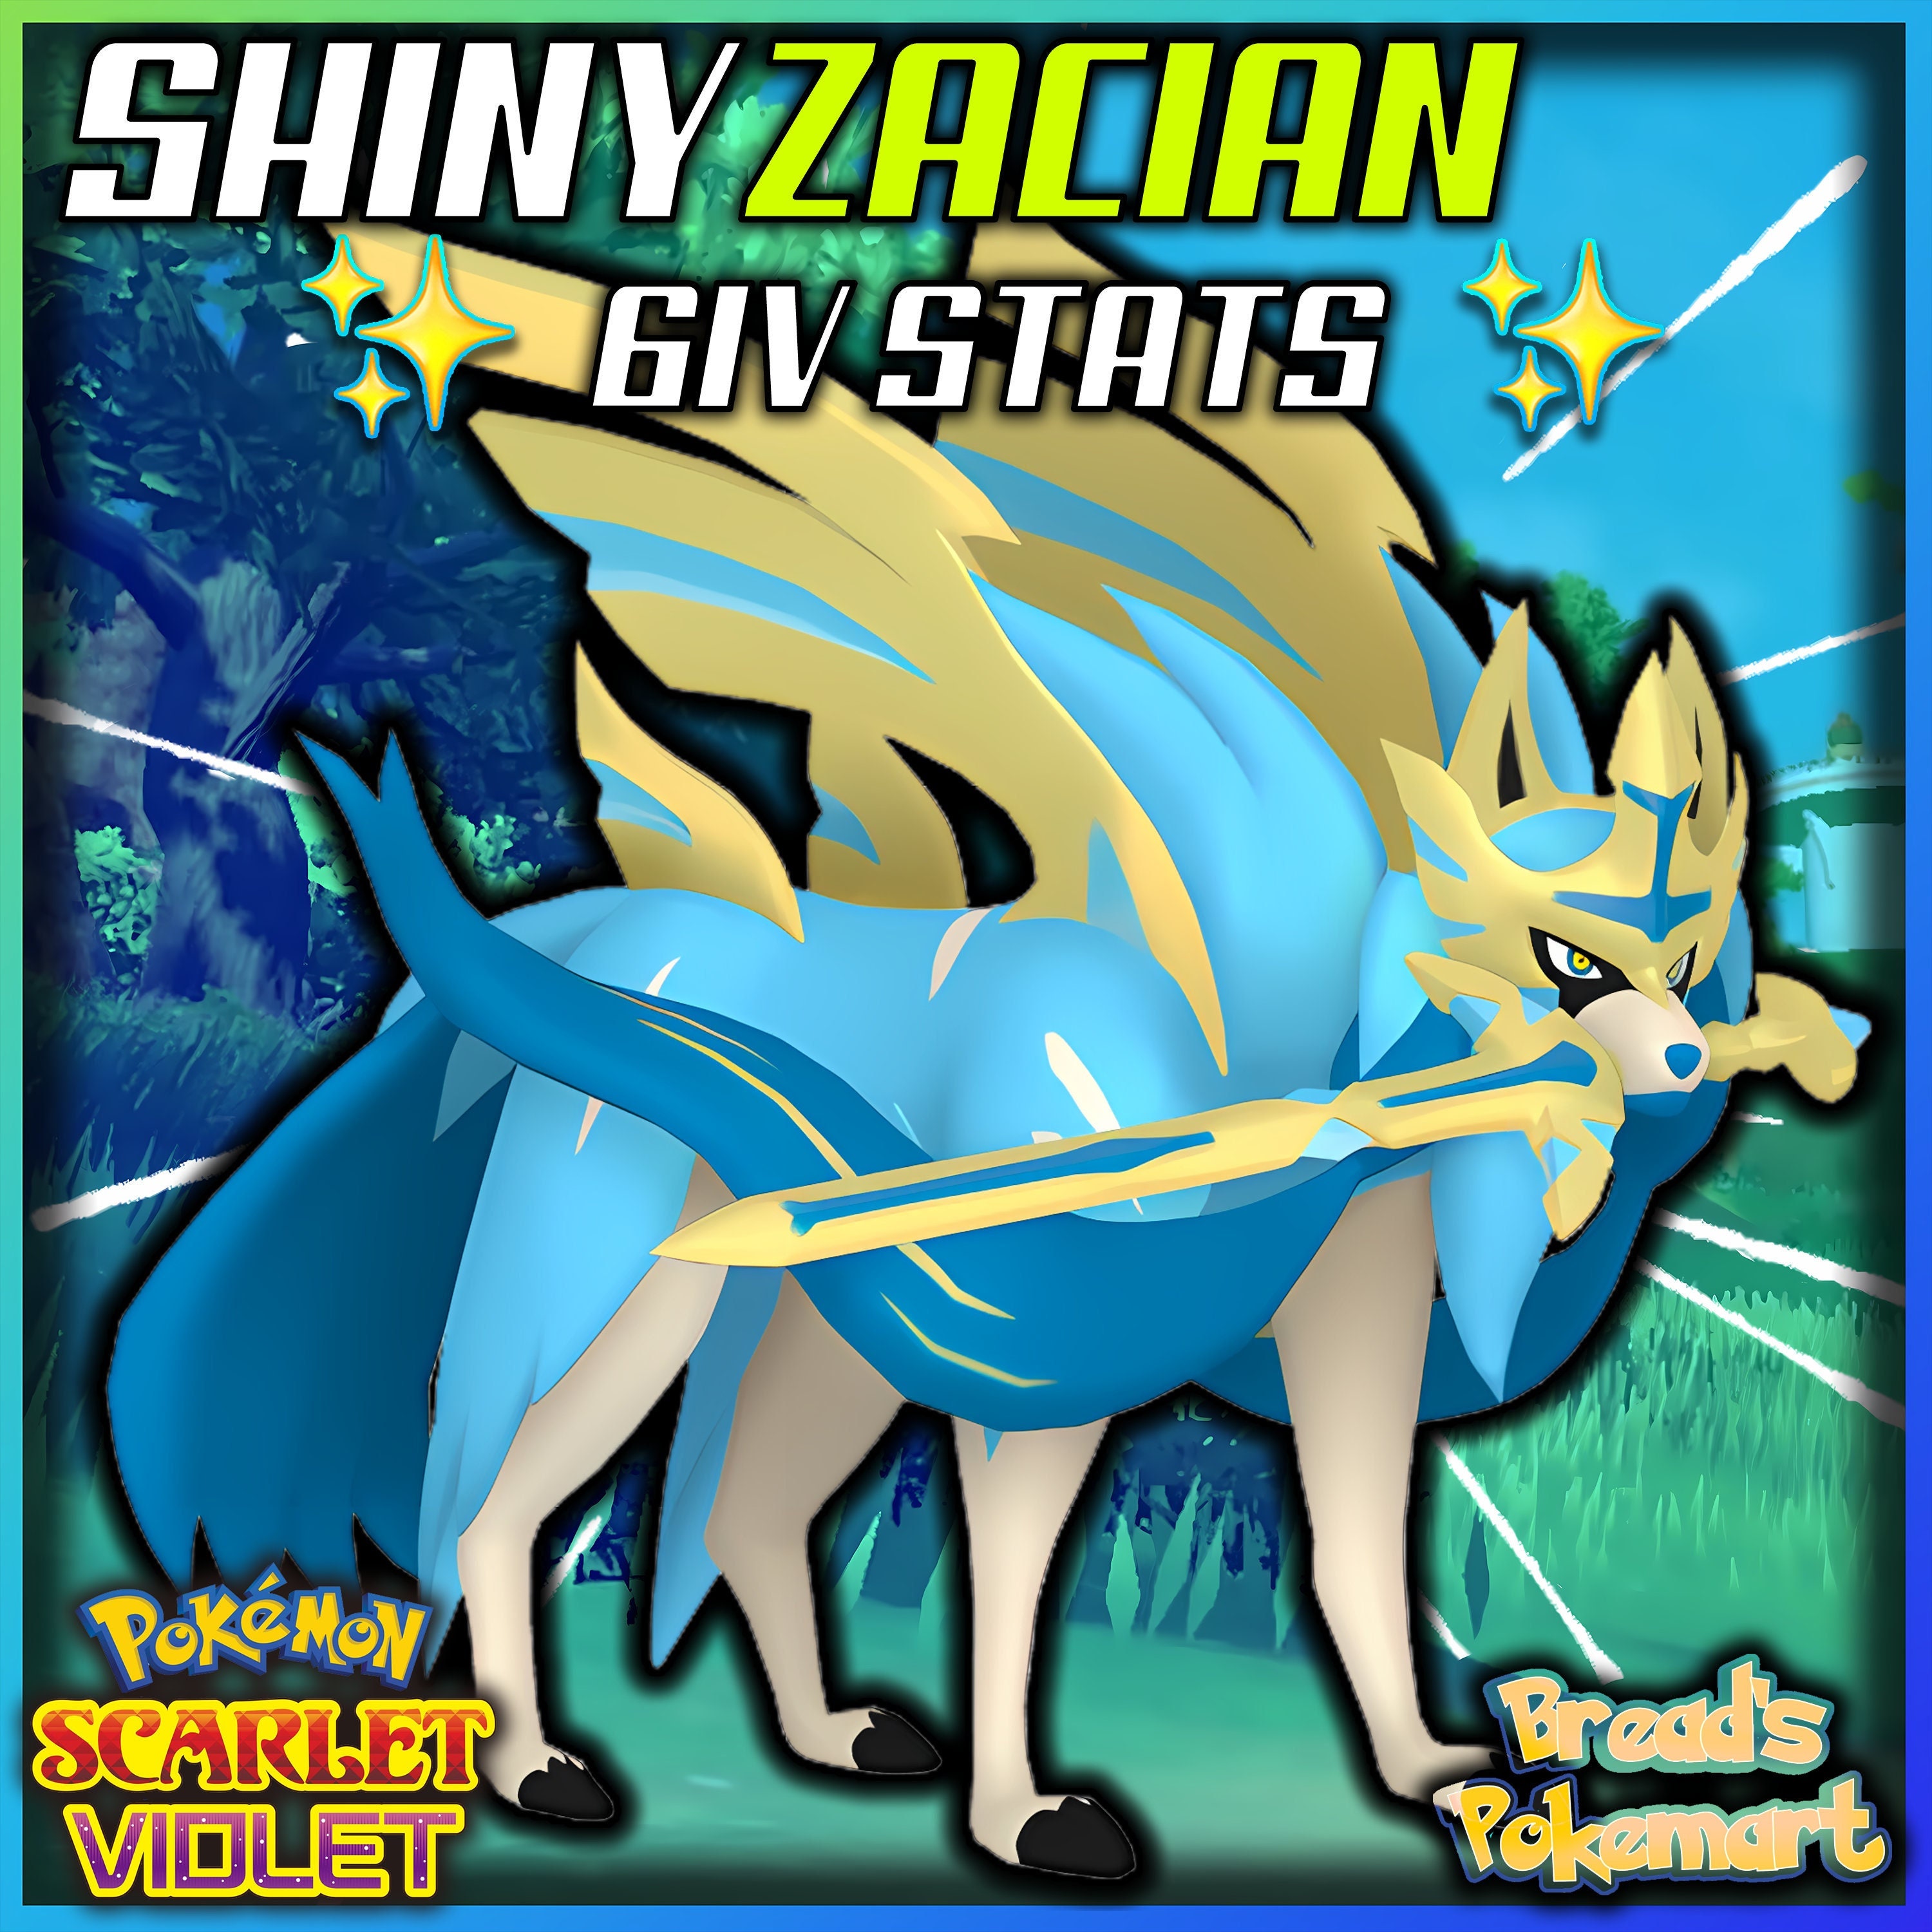 NEW ITEMS* Zacian Crowned Sword & Zamazenta Crowned Shield in Pokemon GO //  CRAZY STATS 